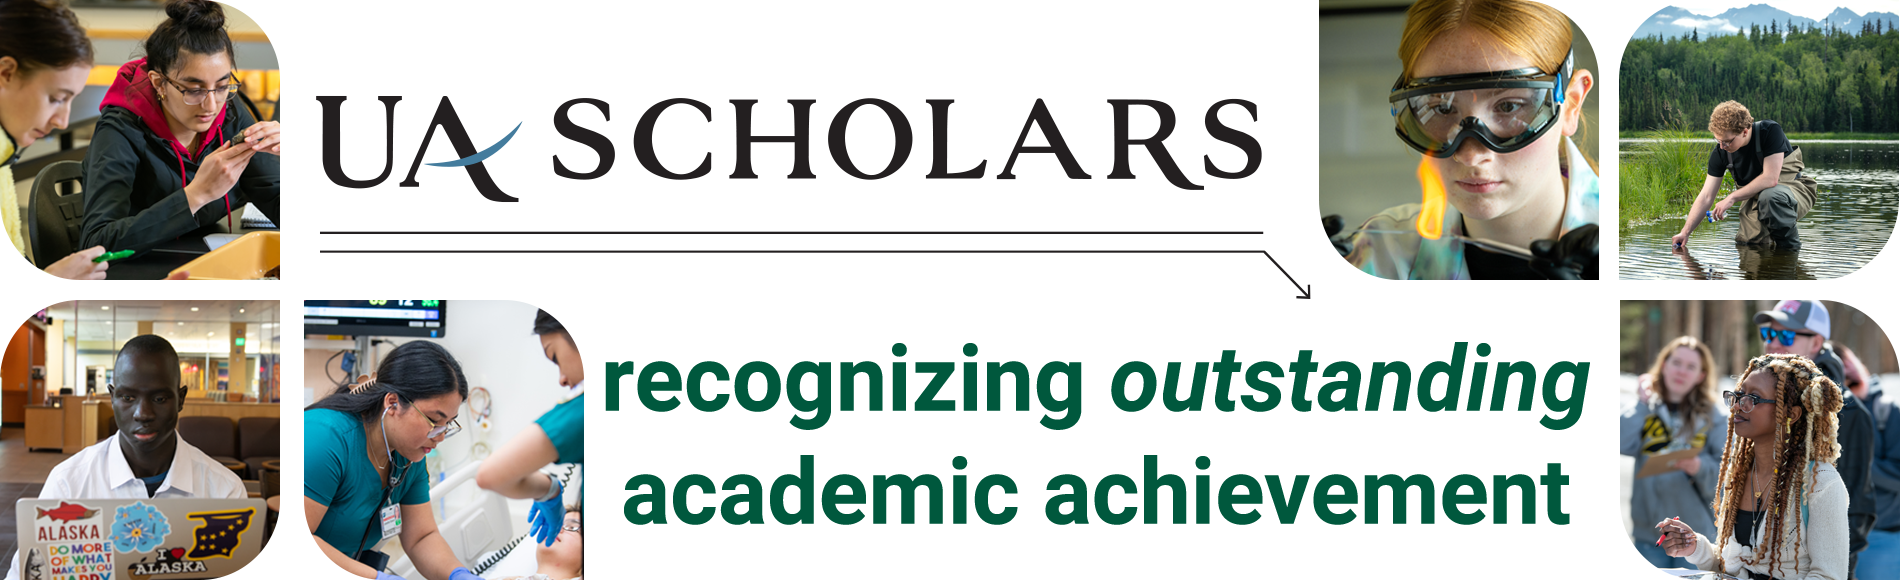 Recognizing outstanding academic achievement